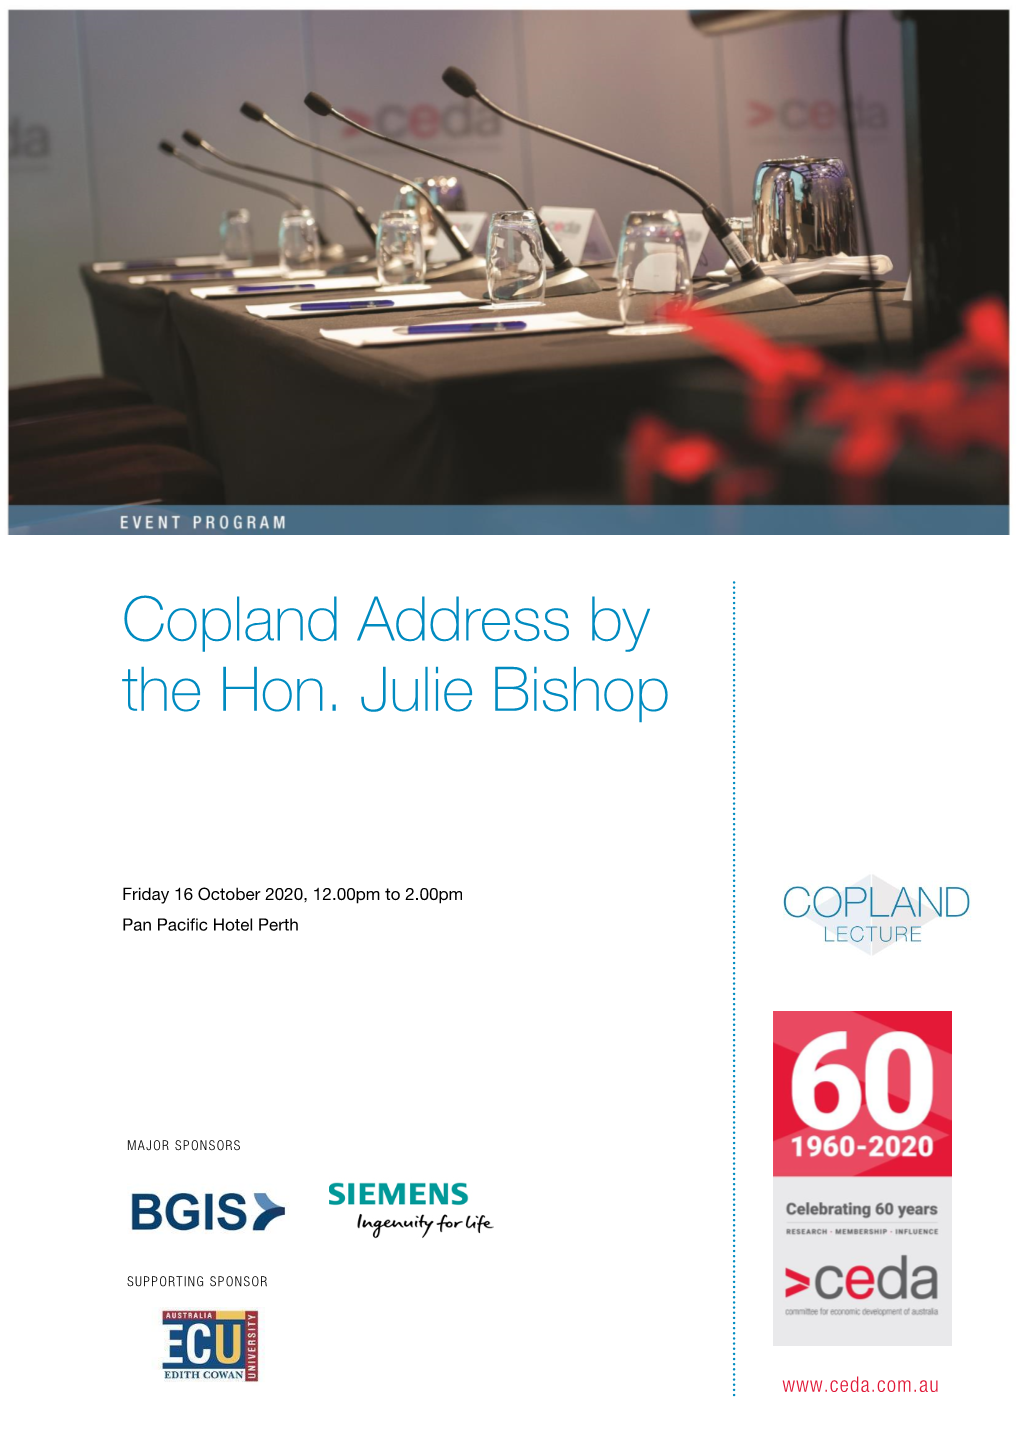 Copland Address by the Hon. Julie Bishop